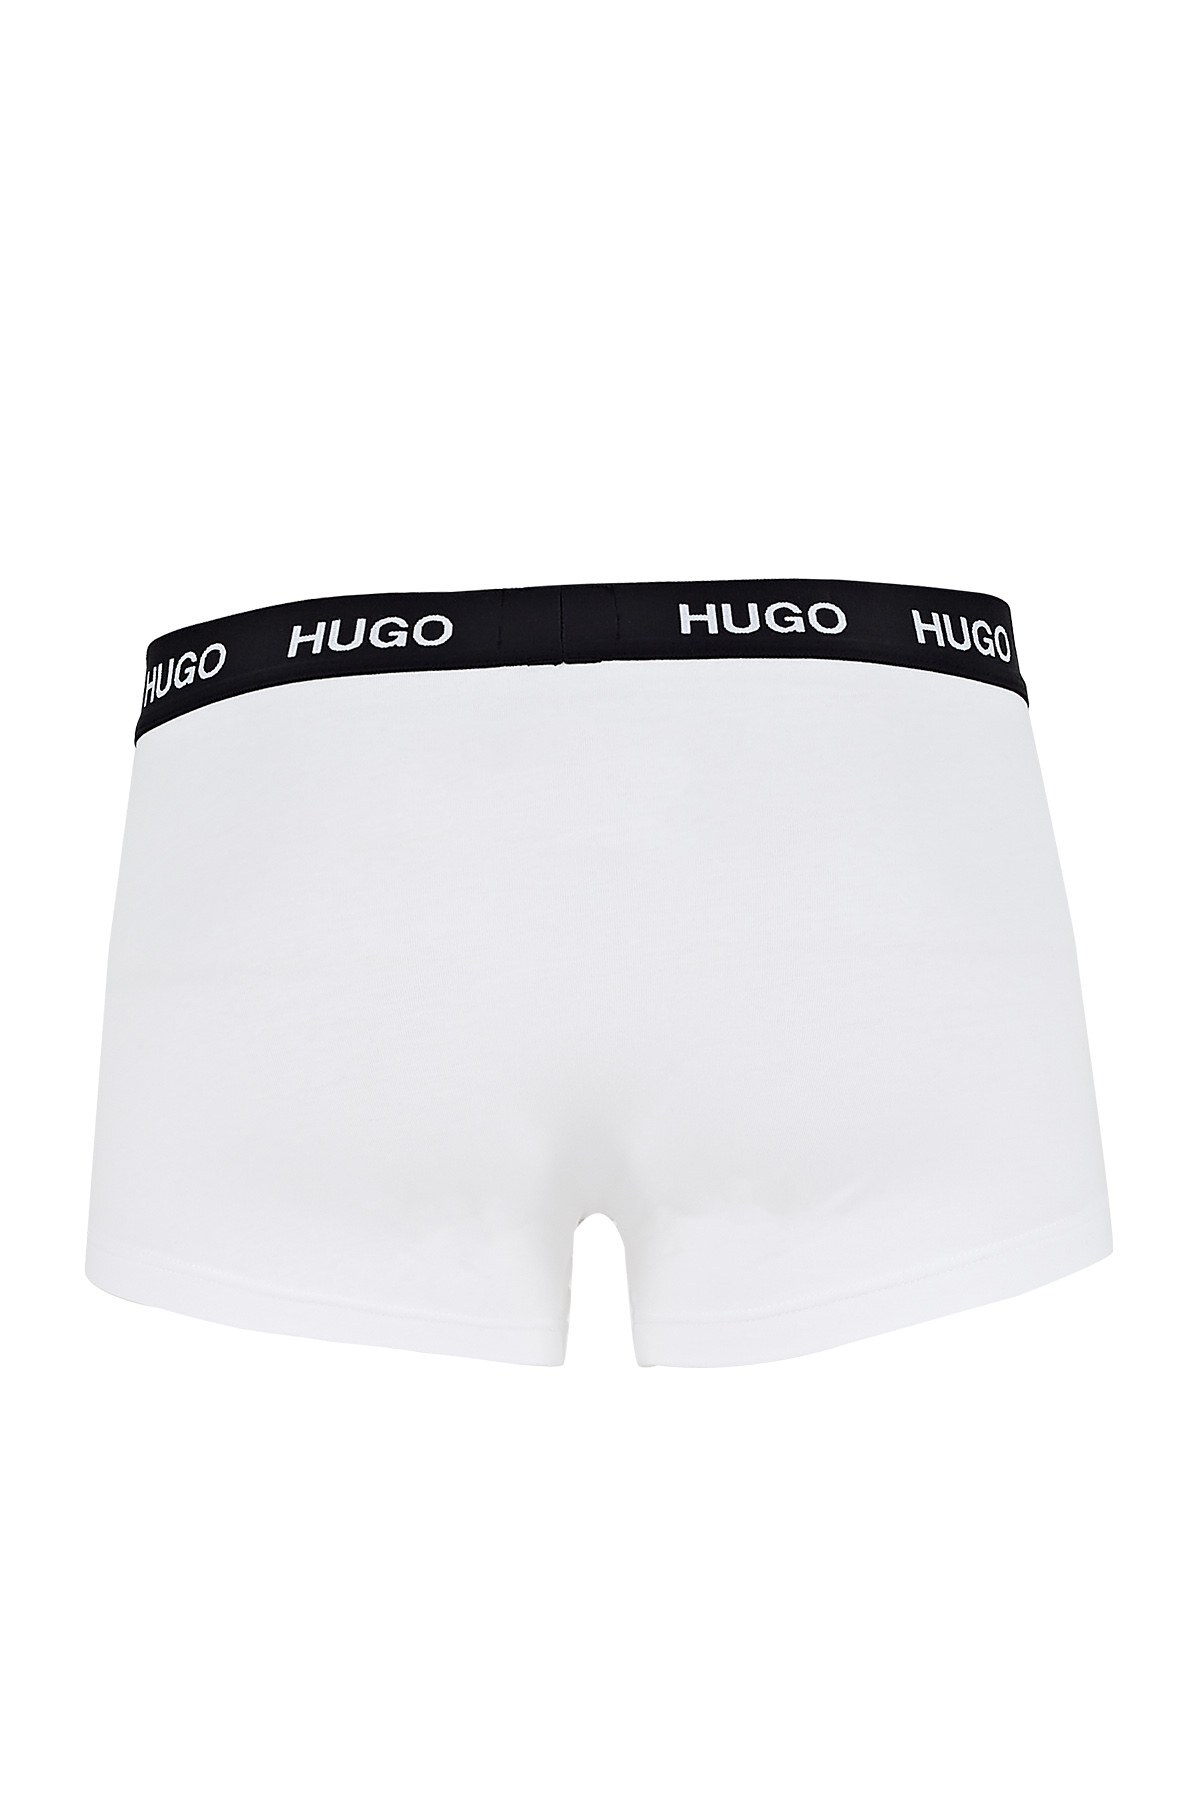 Hugo Boss Pamuklu 3 Pack Erkek Boxer 50449351 960 SİYAH-KIRMIZI-BEYAZ